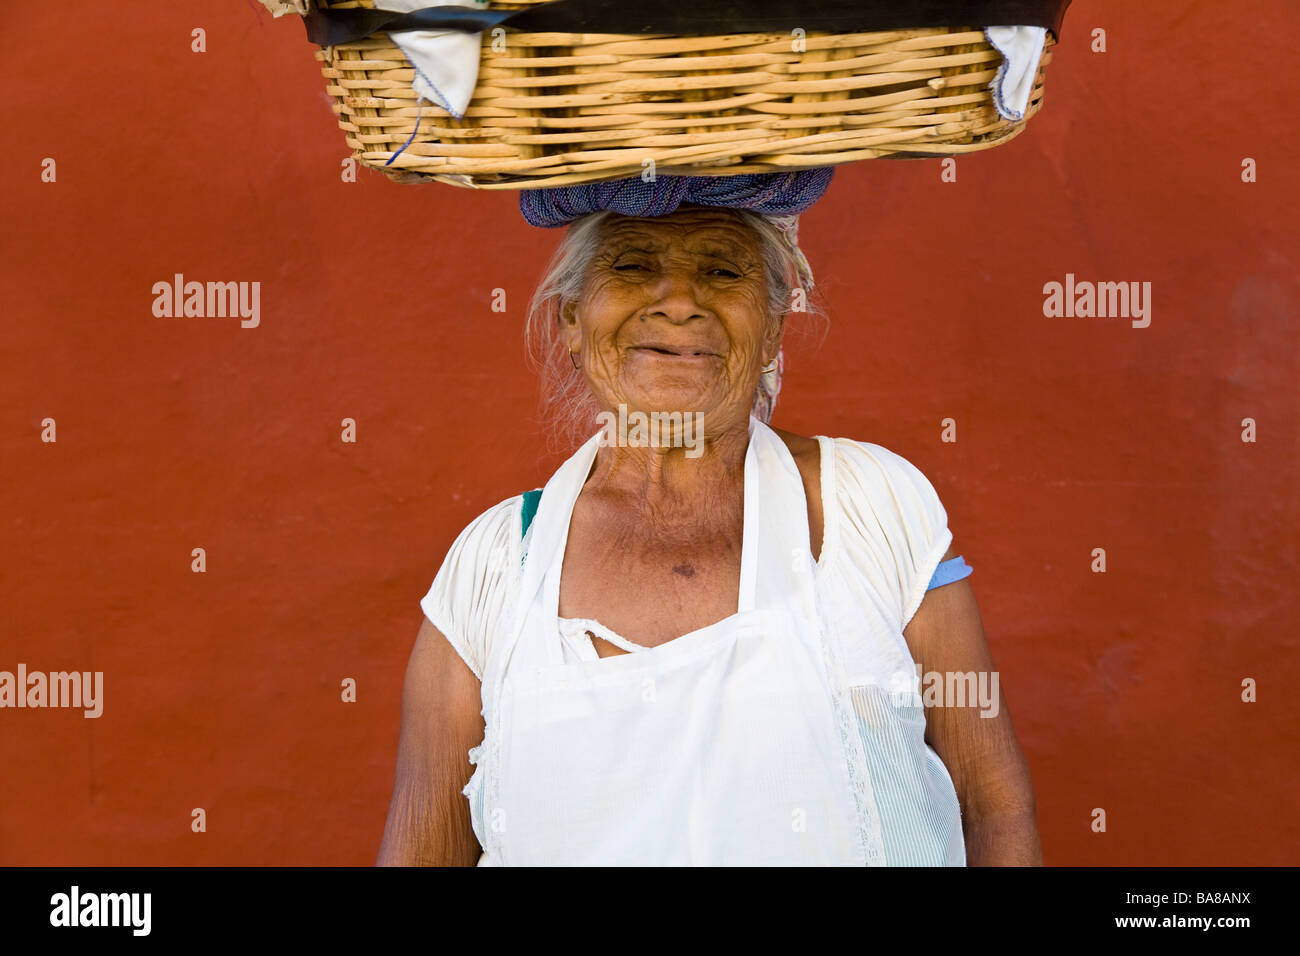 Straßenhändler mit Korb auf dem Kopf, Oaxaca, Bundesstaat Oaxaca, Mexico Stockfoto